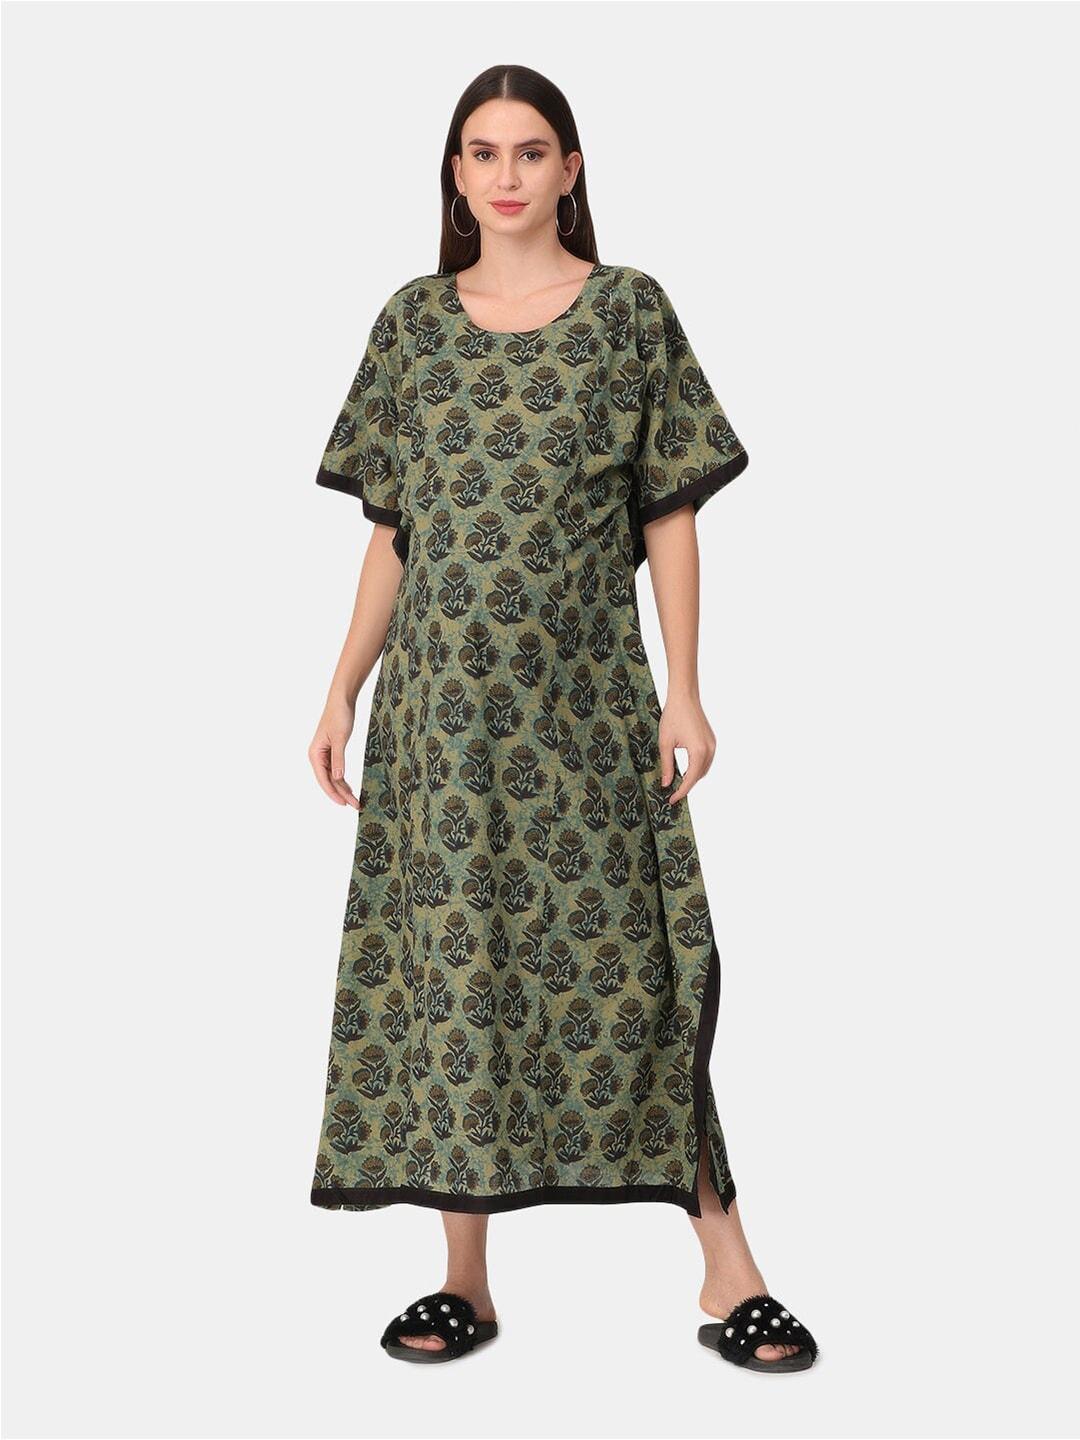 the-mom-store-women-olive-green-printed-maternity-and-nursing-kaftan-maxi-nightdress